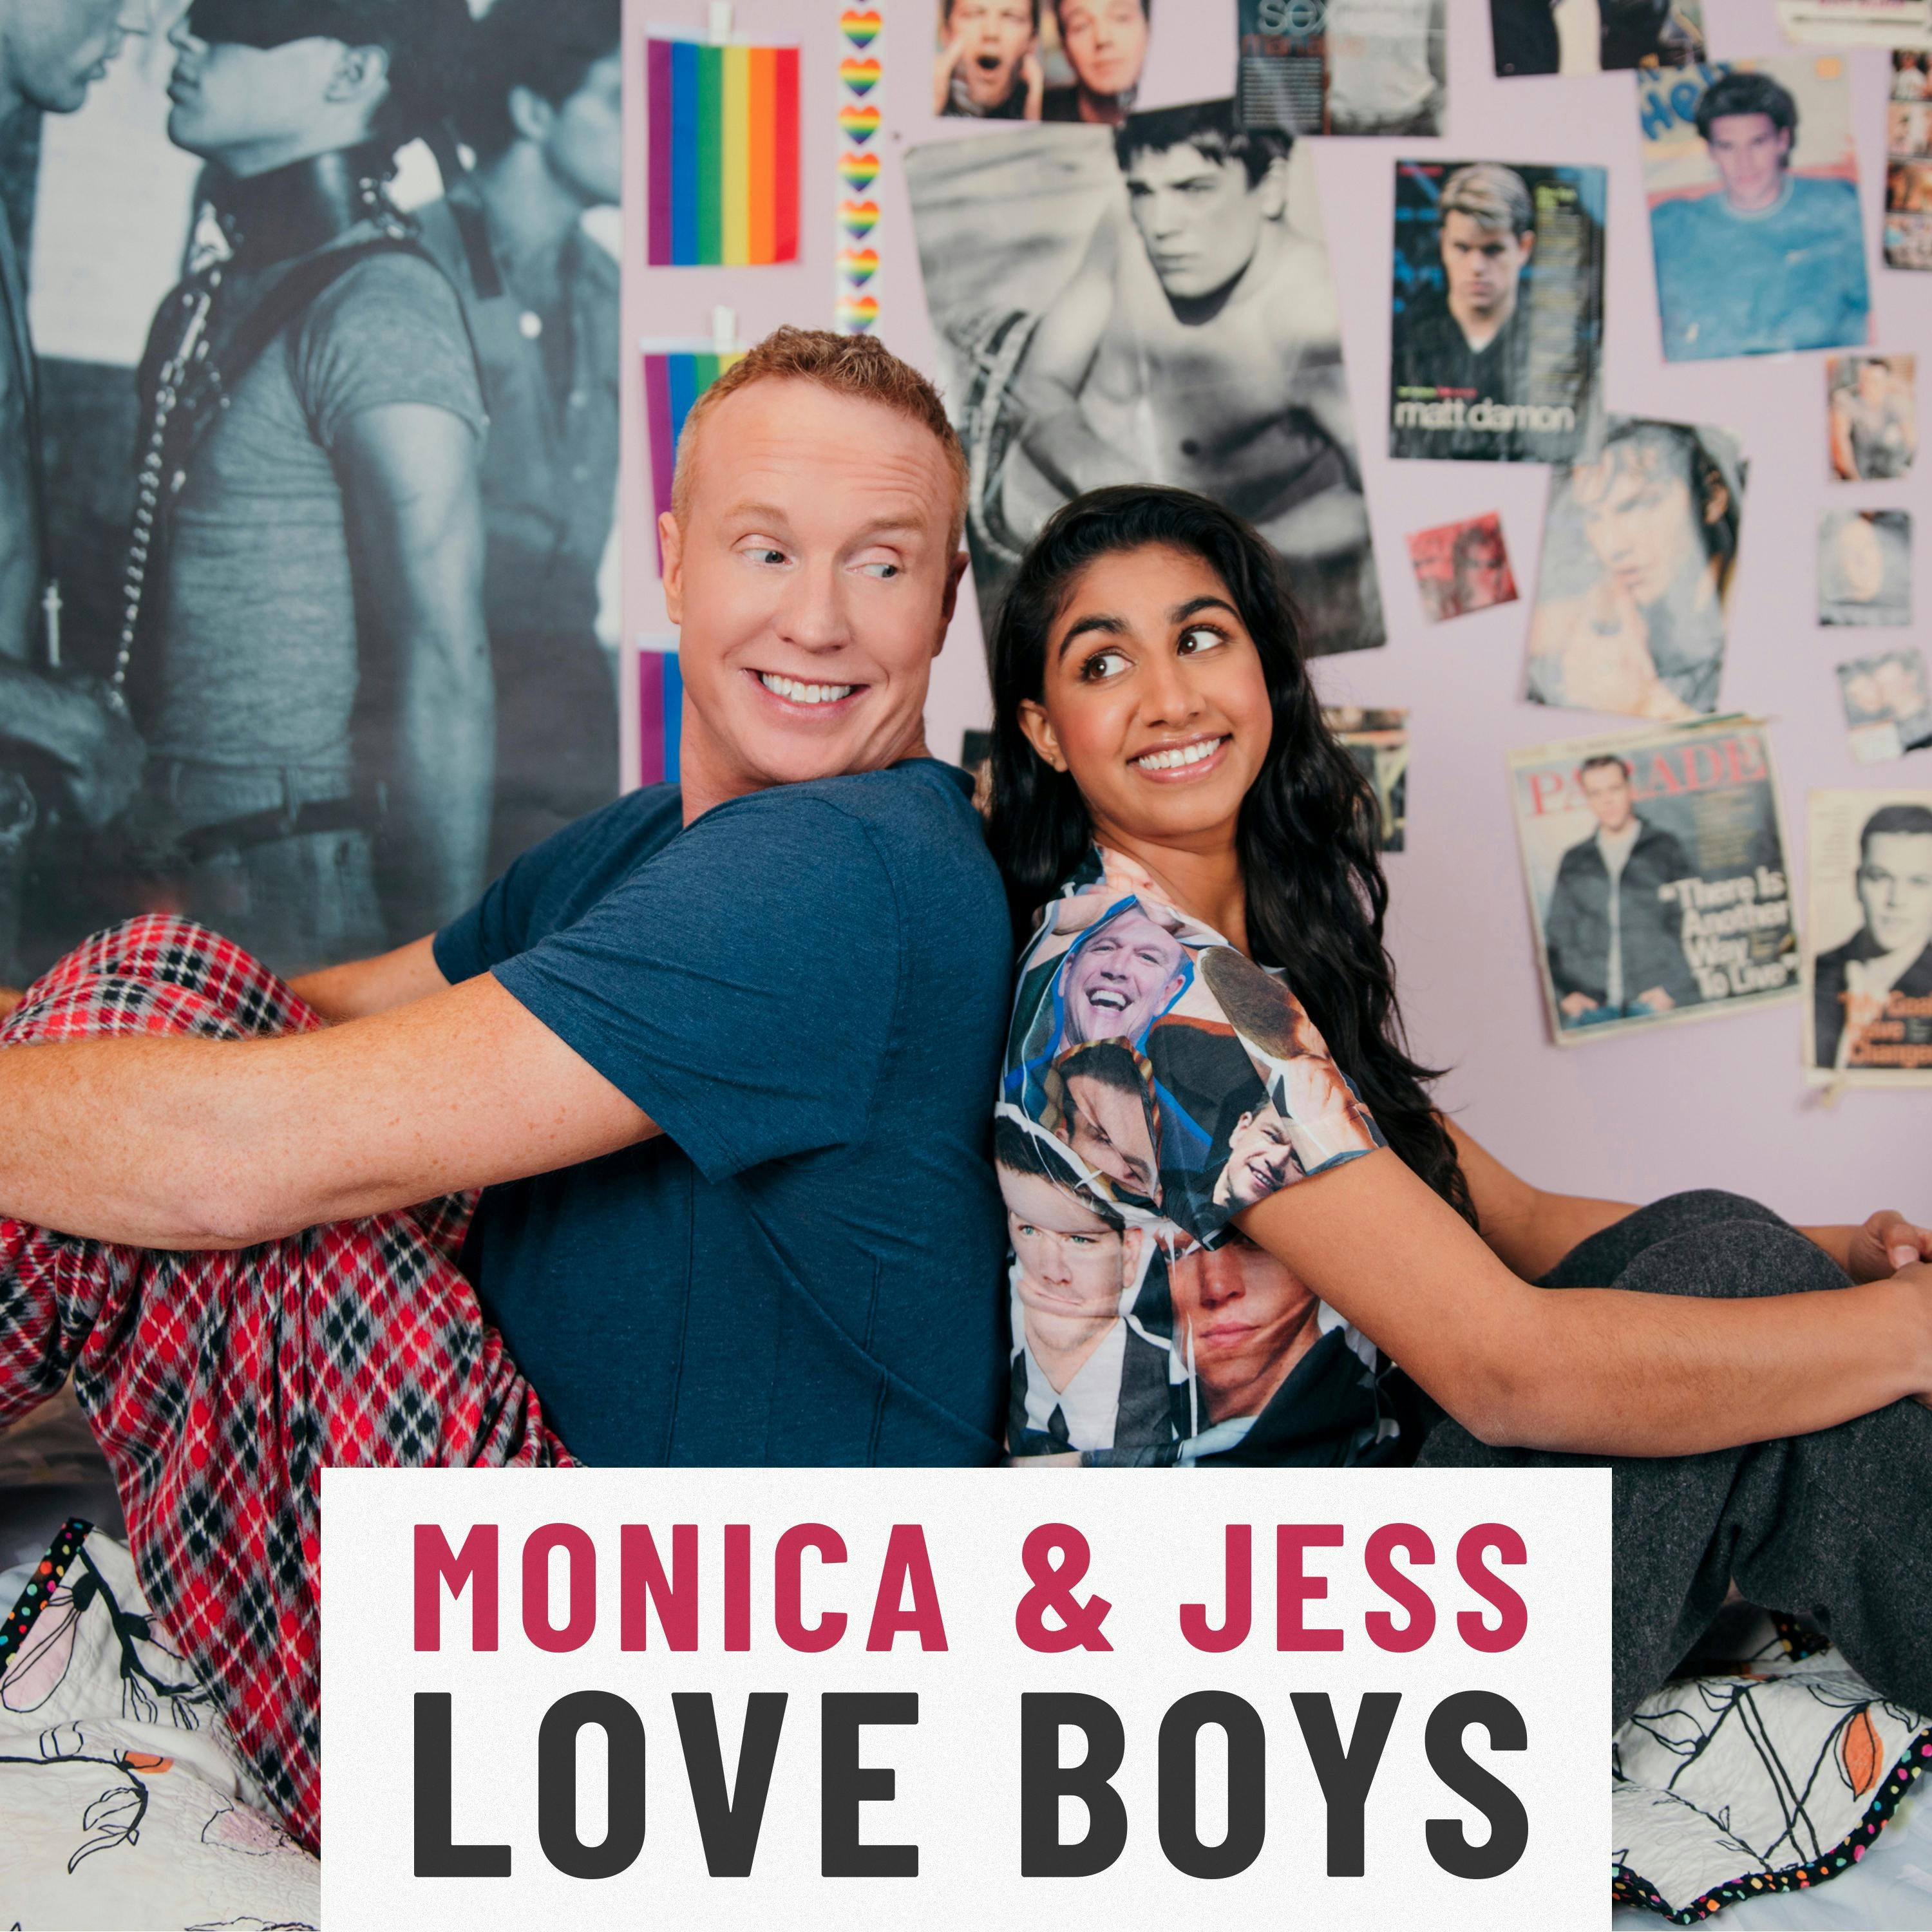 Introducing: Monica & Jess Love Boys by Armchair Umbrella